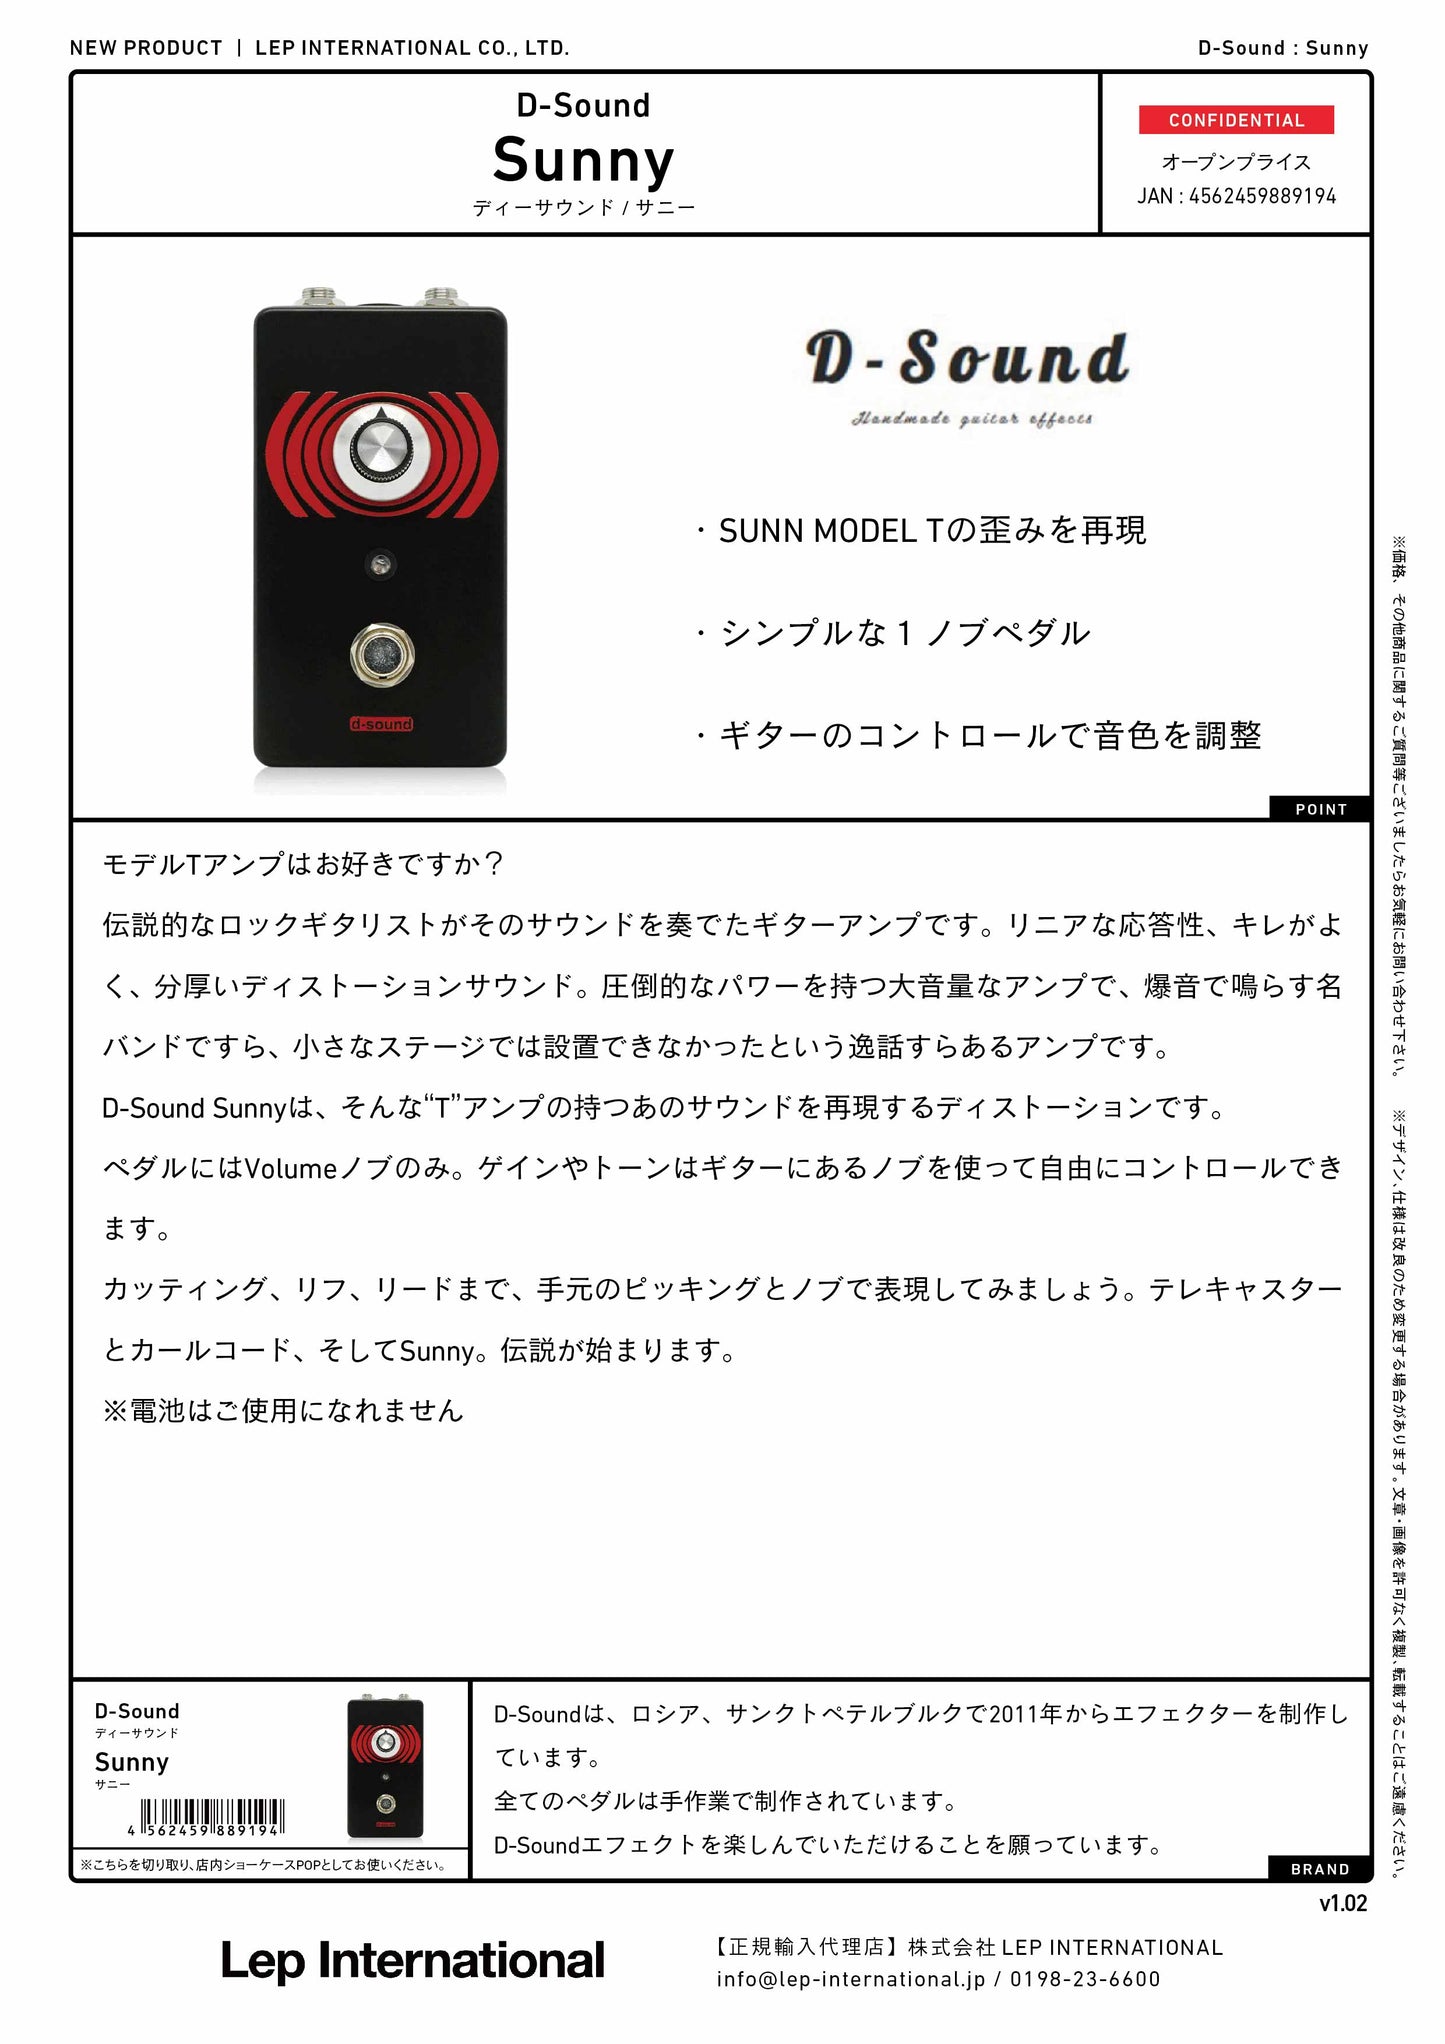 D-Sound/Sunny